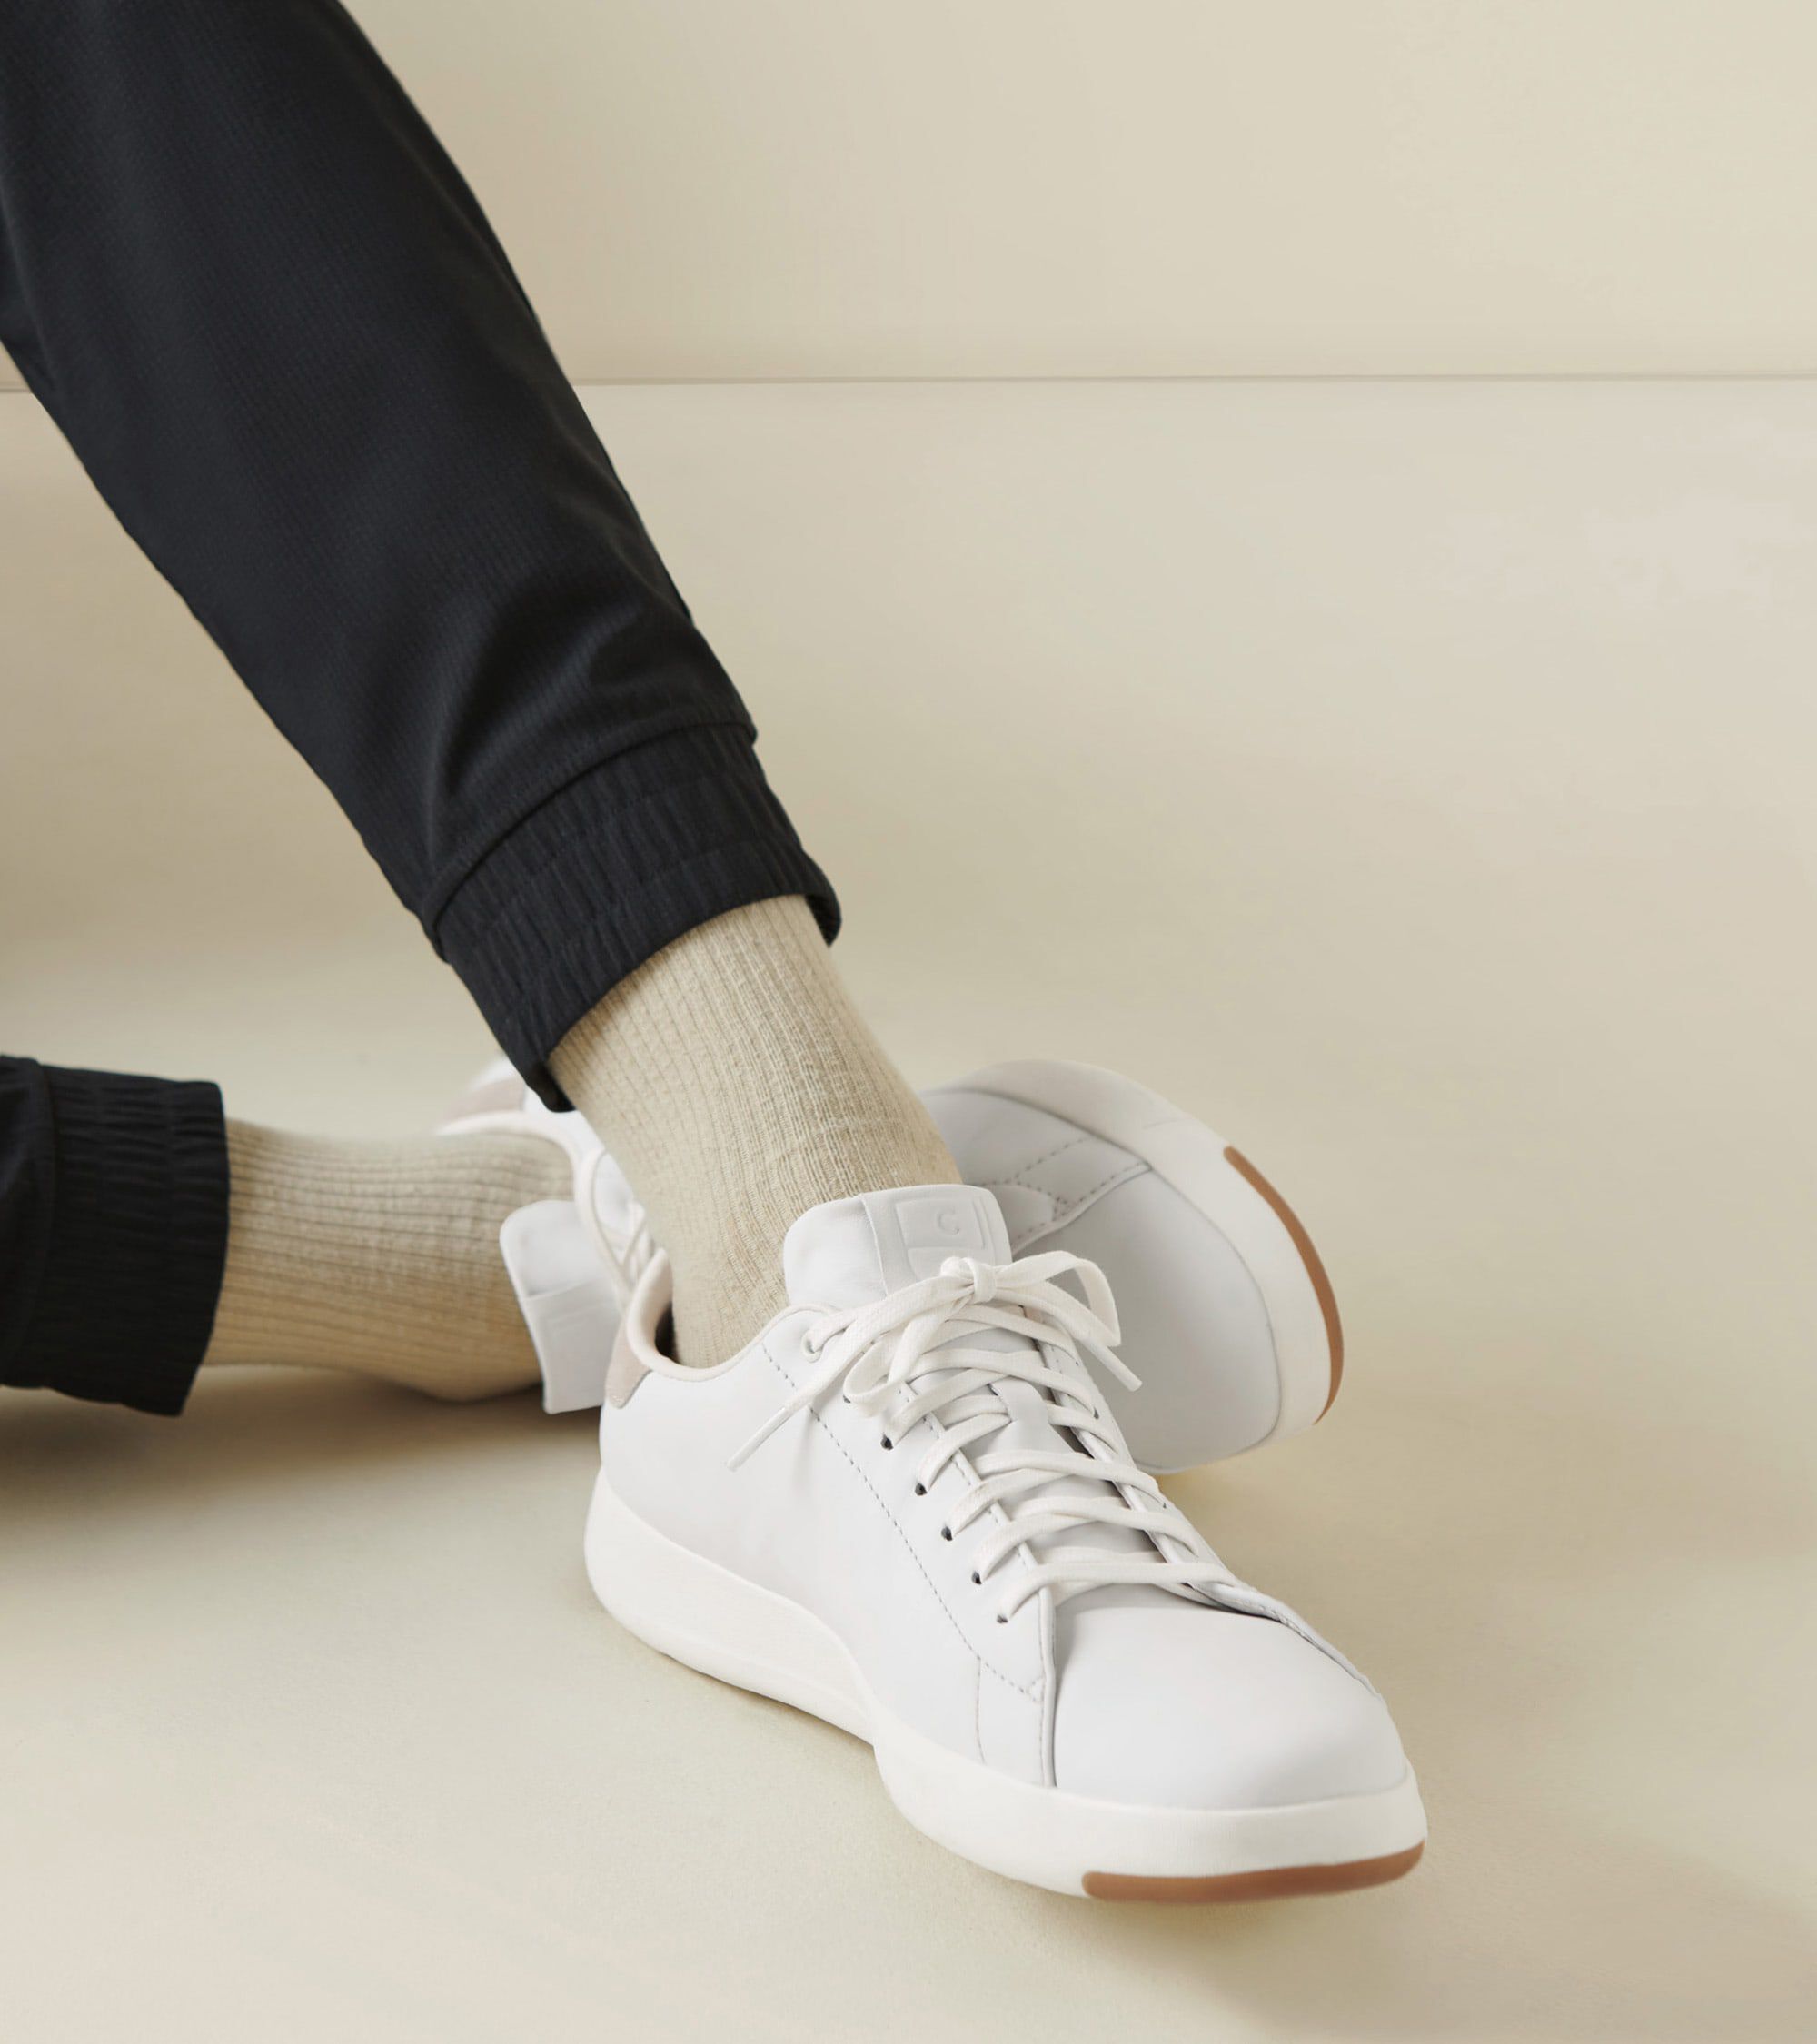 Cole Haan Generation ZEROGRAND Review — Its Lightest Sneaker yet